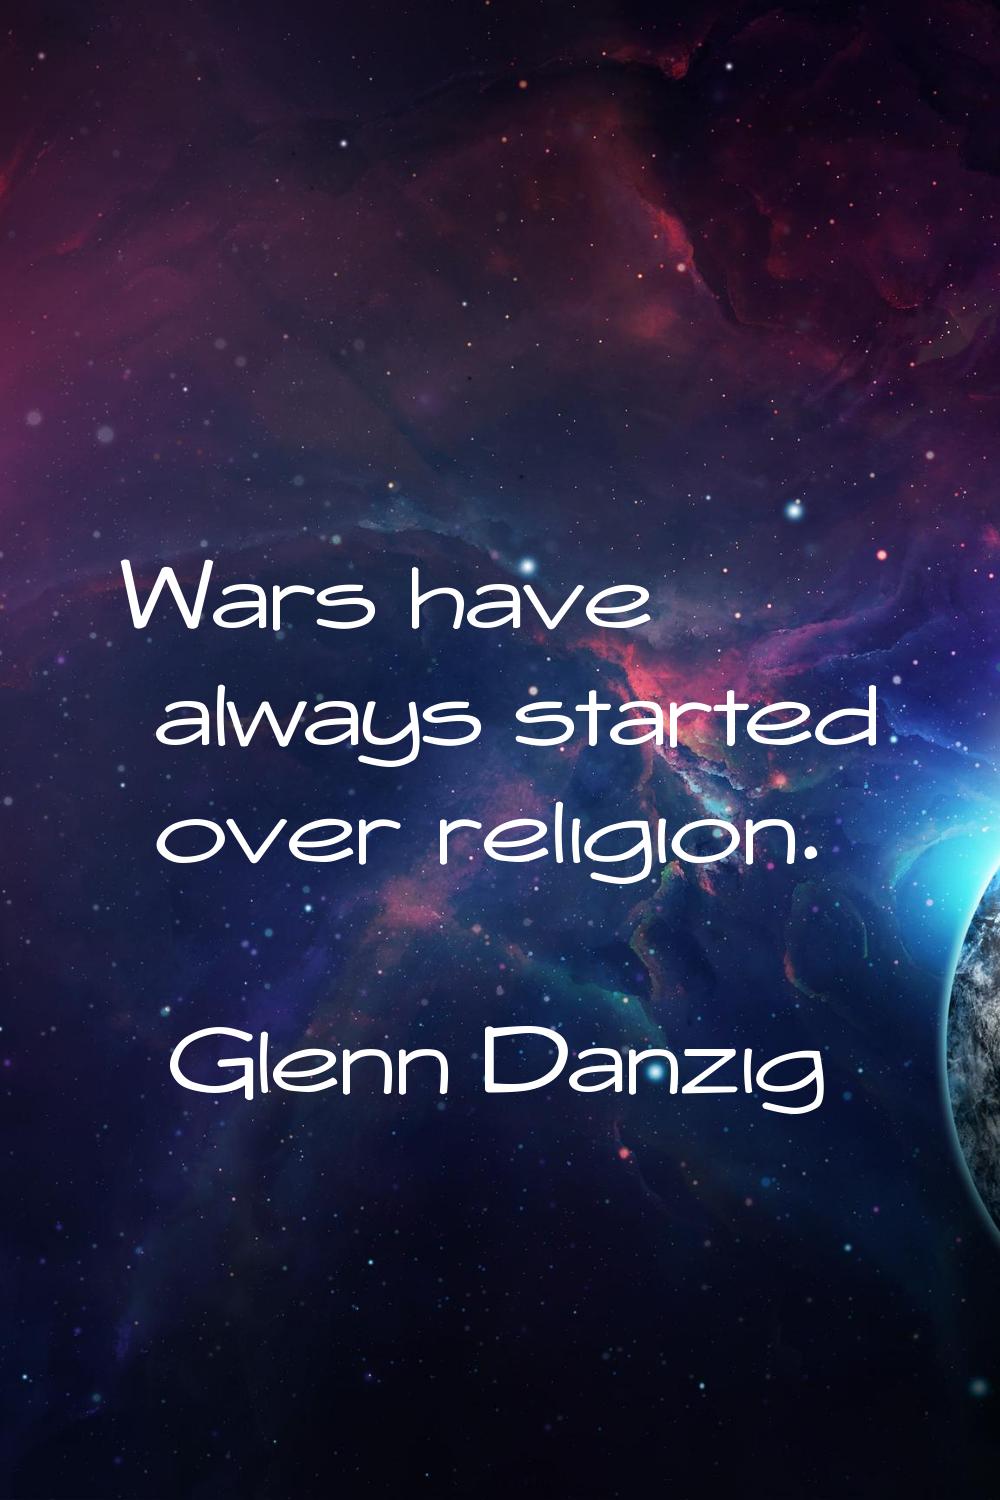 Wars have always started over religion.